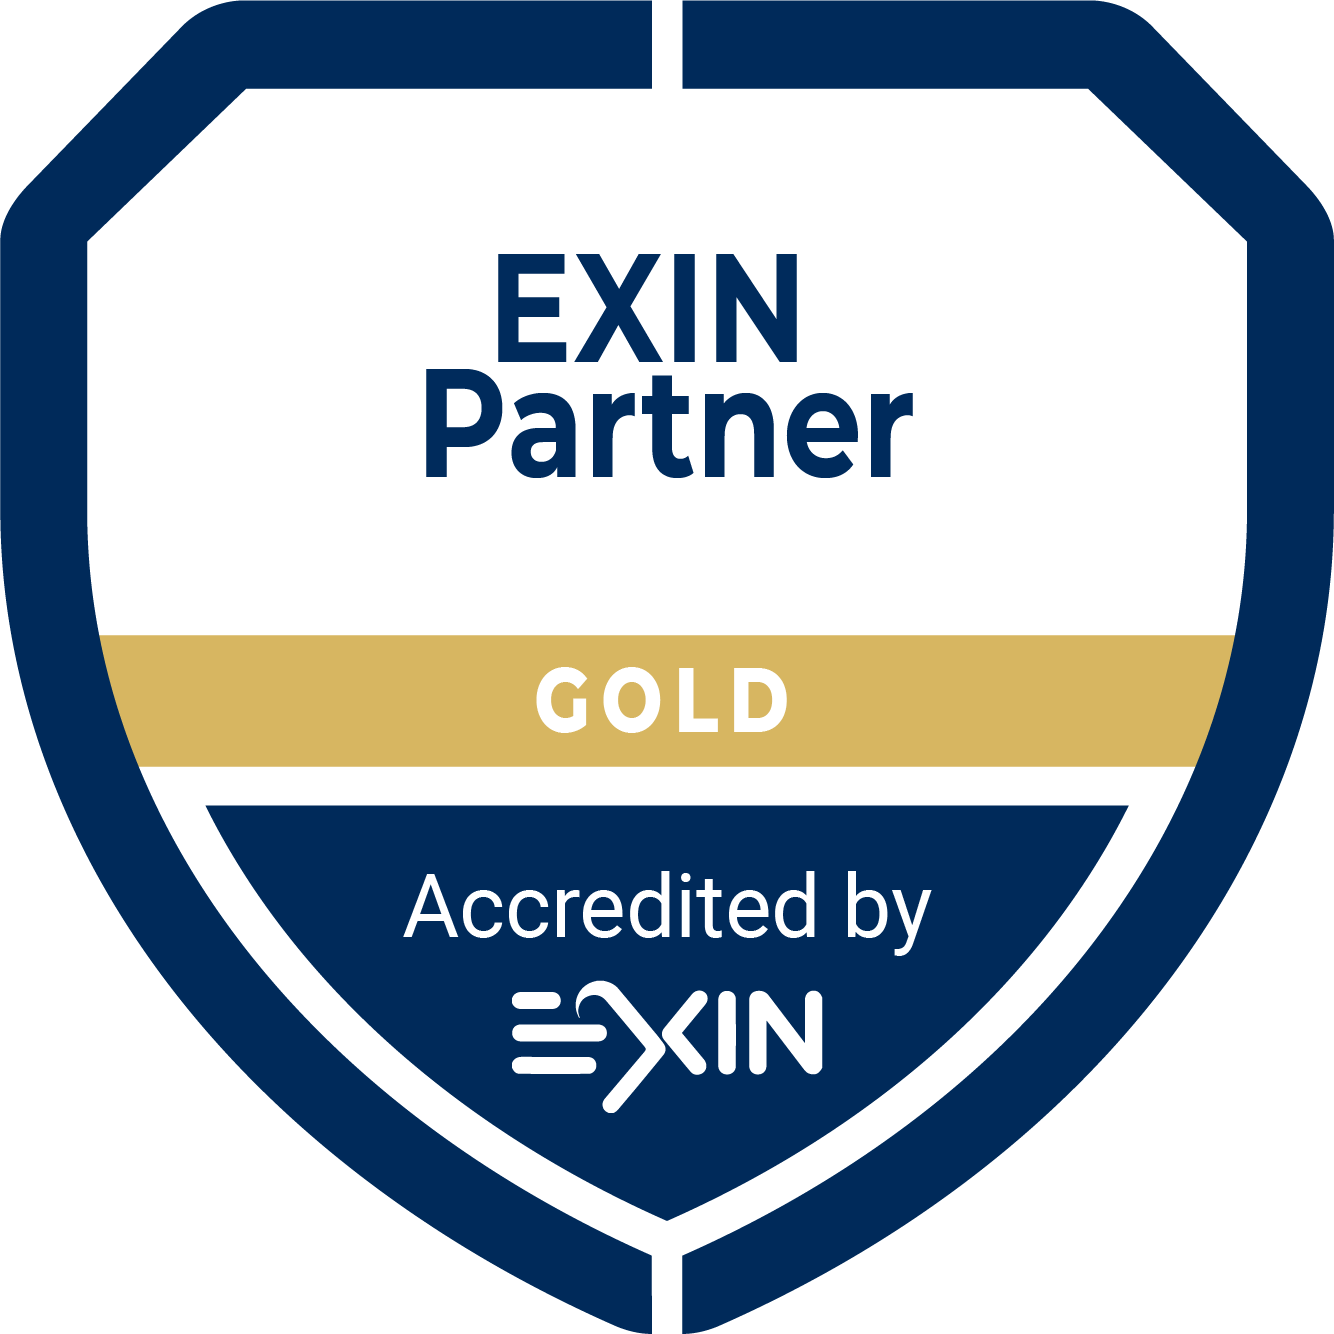 EXIN Partner Gold